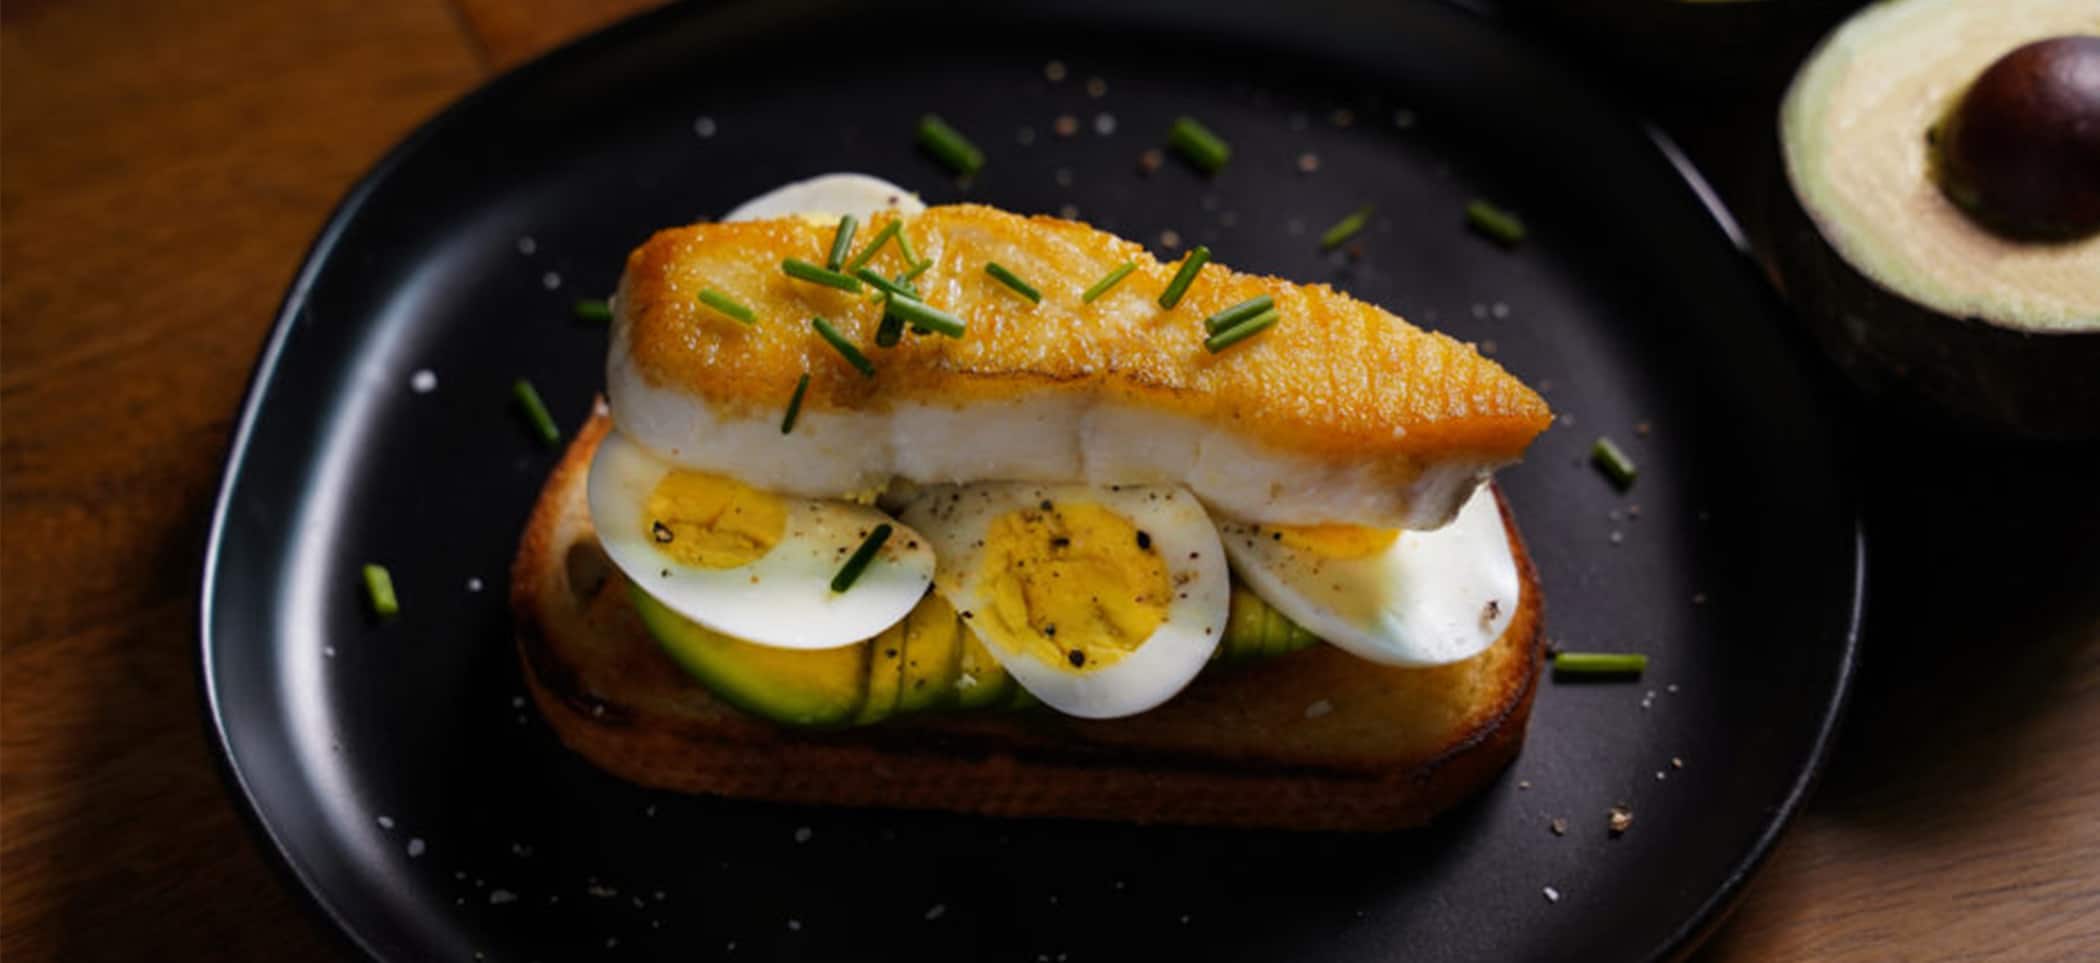 Sliced Egg Avocado Toast with White Fish